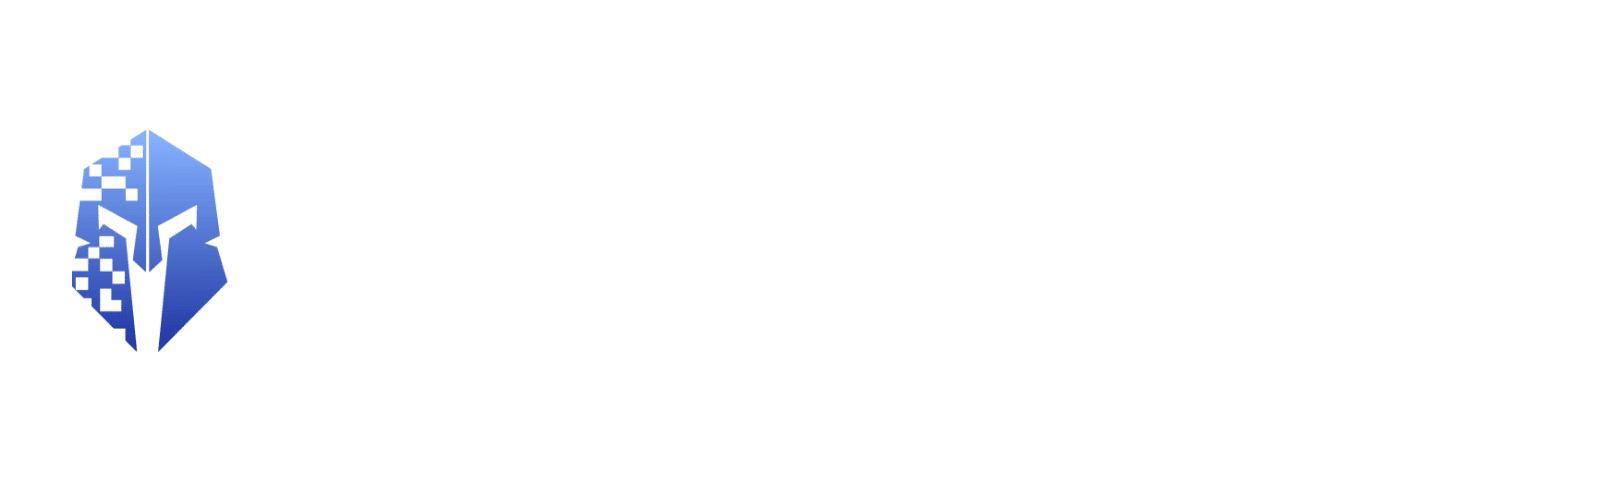 TenEleven aInterpres Logo White